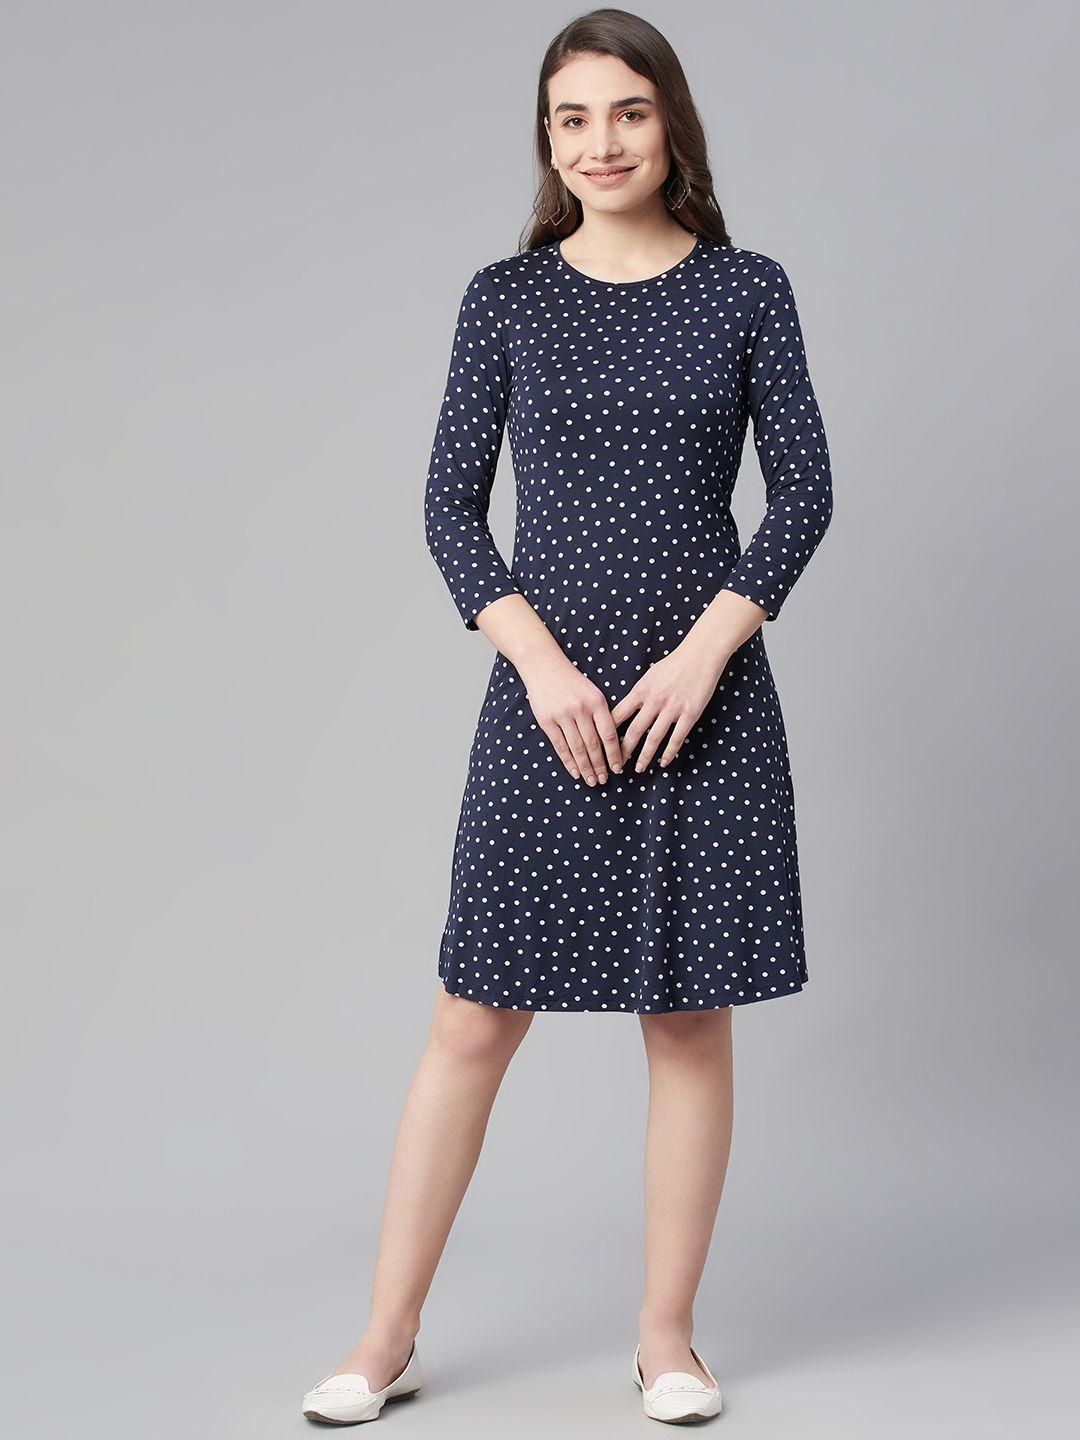 marks & spencer women navy blue & white polka dots printed a-line dress